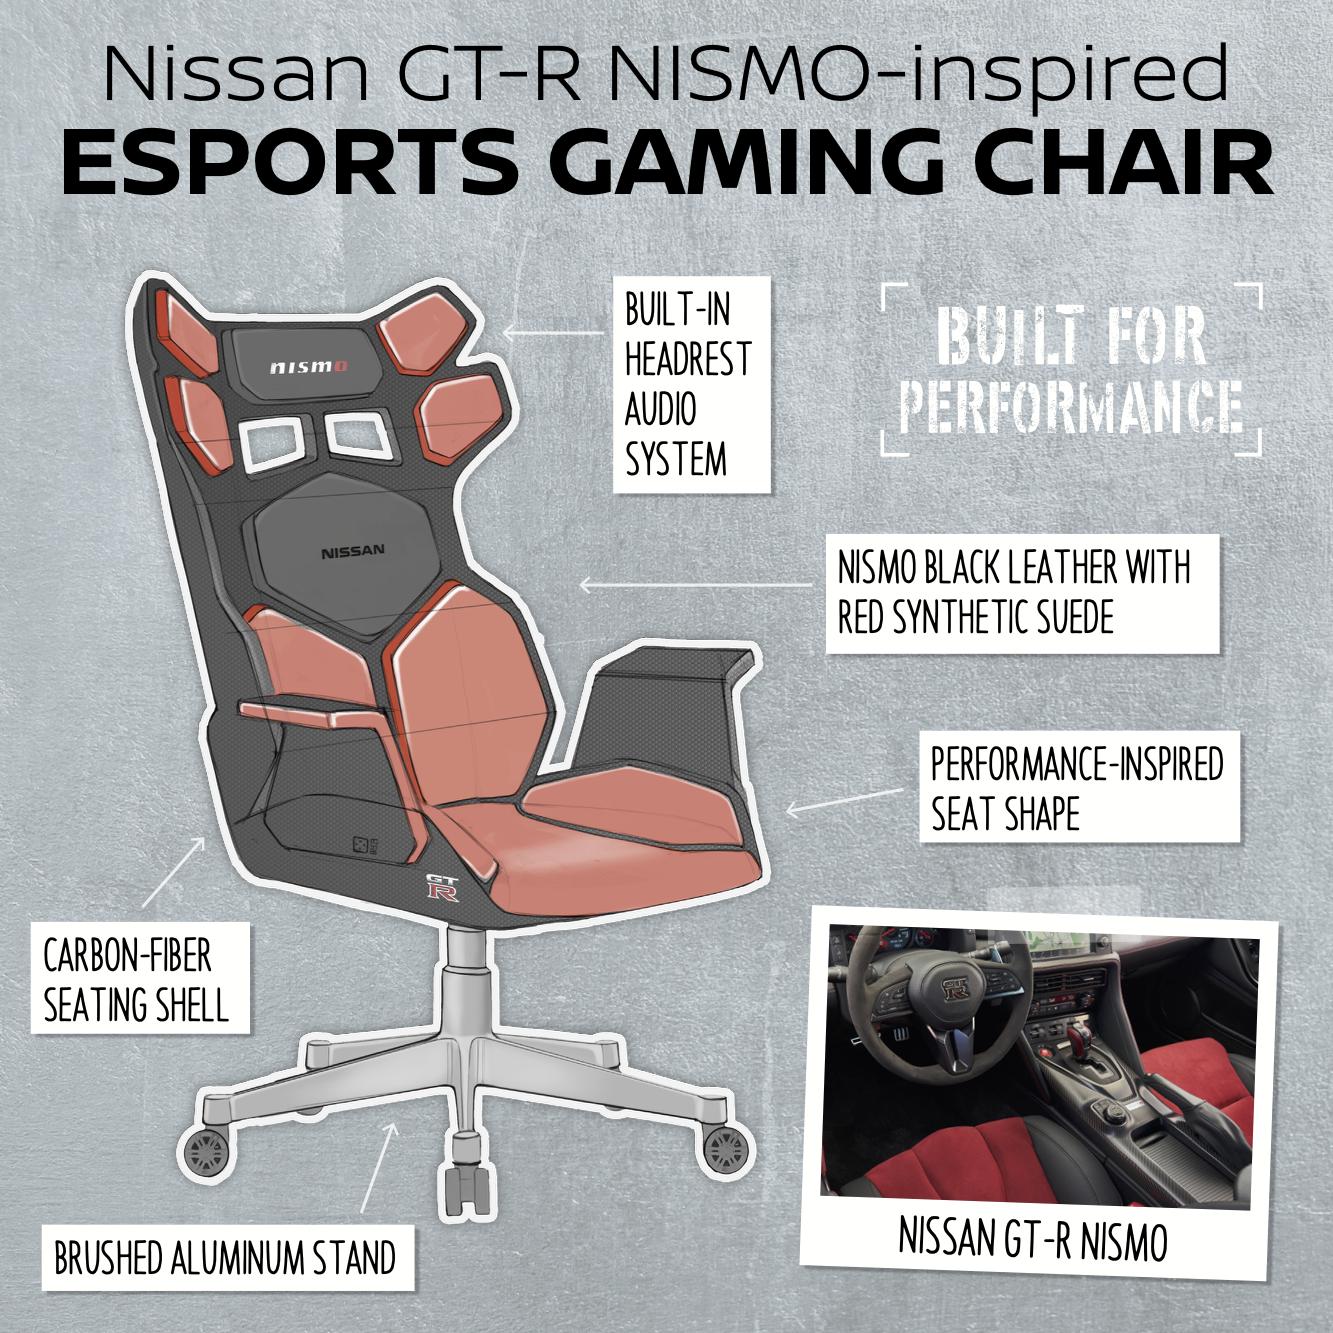 Nissan eSport chair